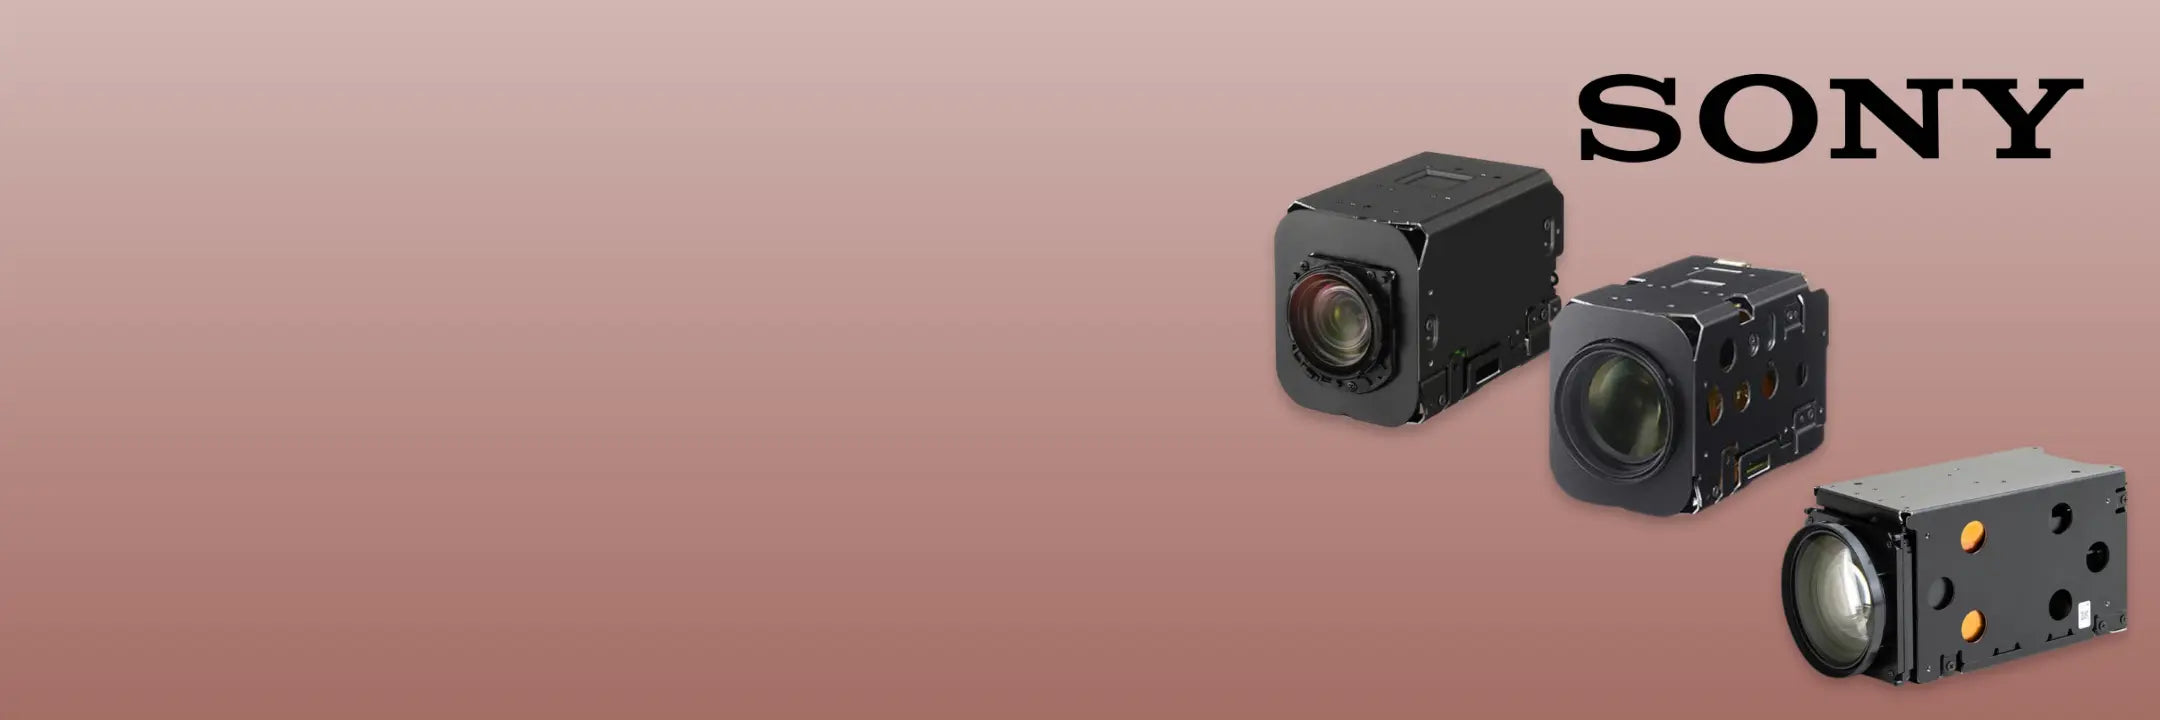 sony fcb block cameras desktop banner 